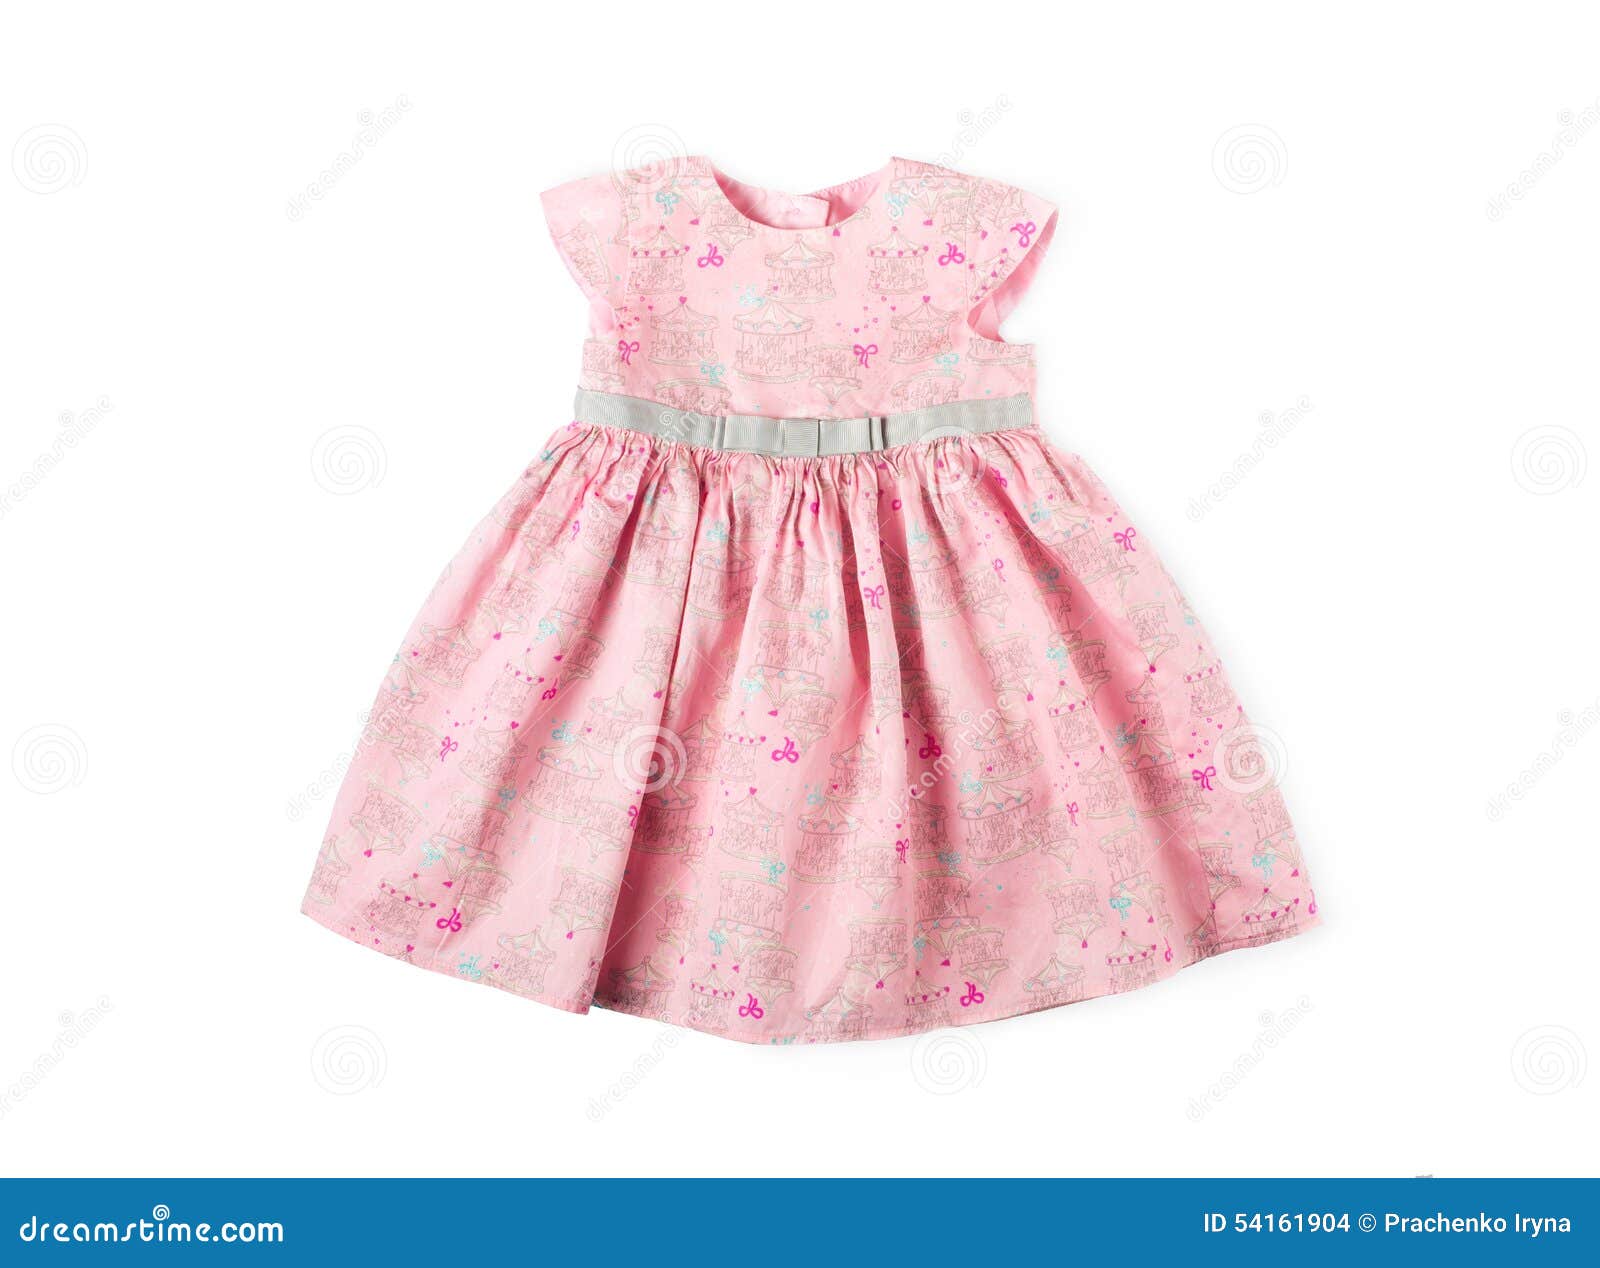 Baby summer dress stock photo. Image of elegant, cotton - 54161904